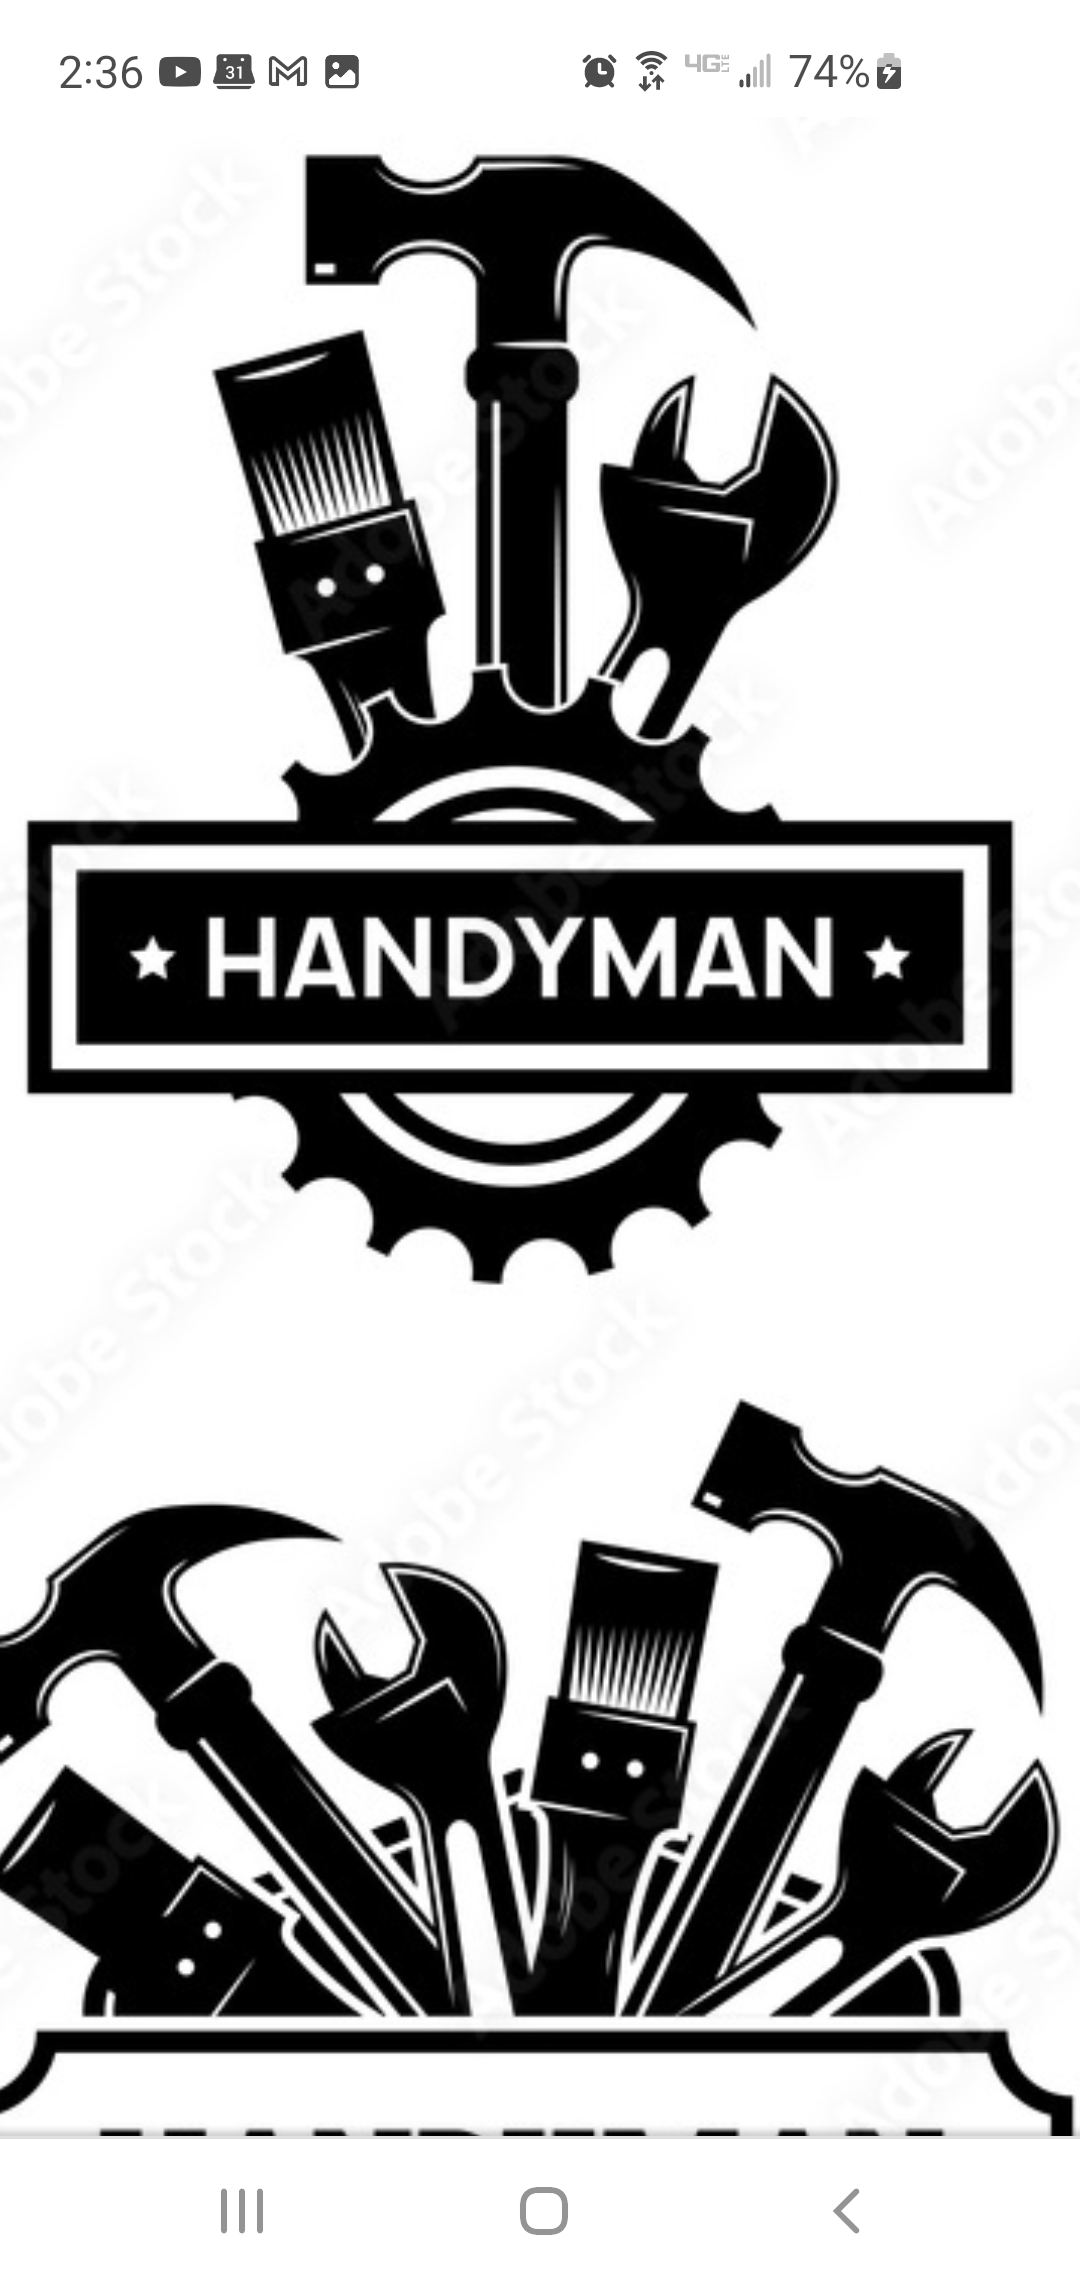 GC Installer - Handyman Services - Unlicensed Contractor Logo